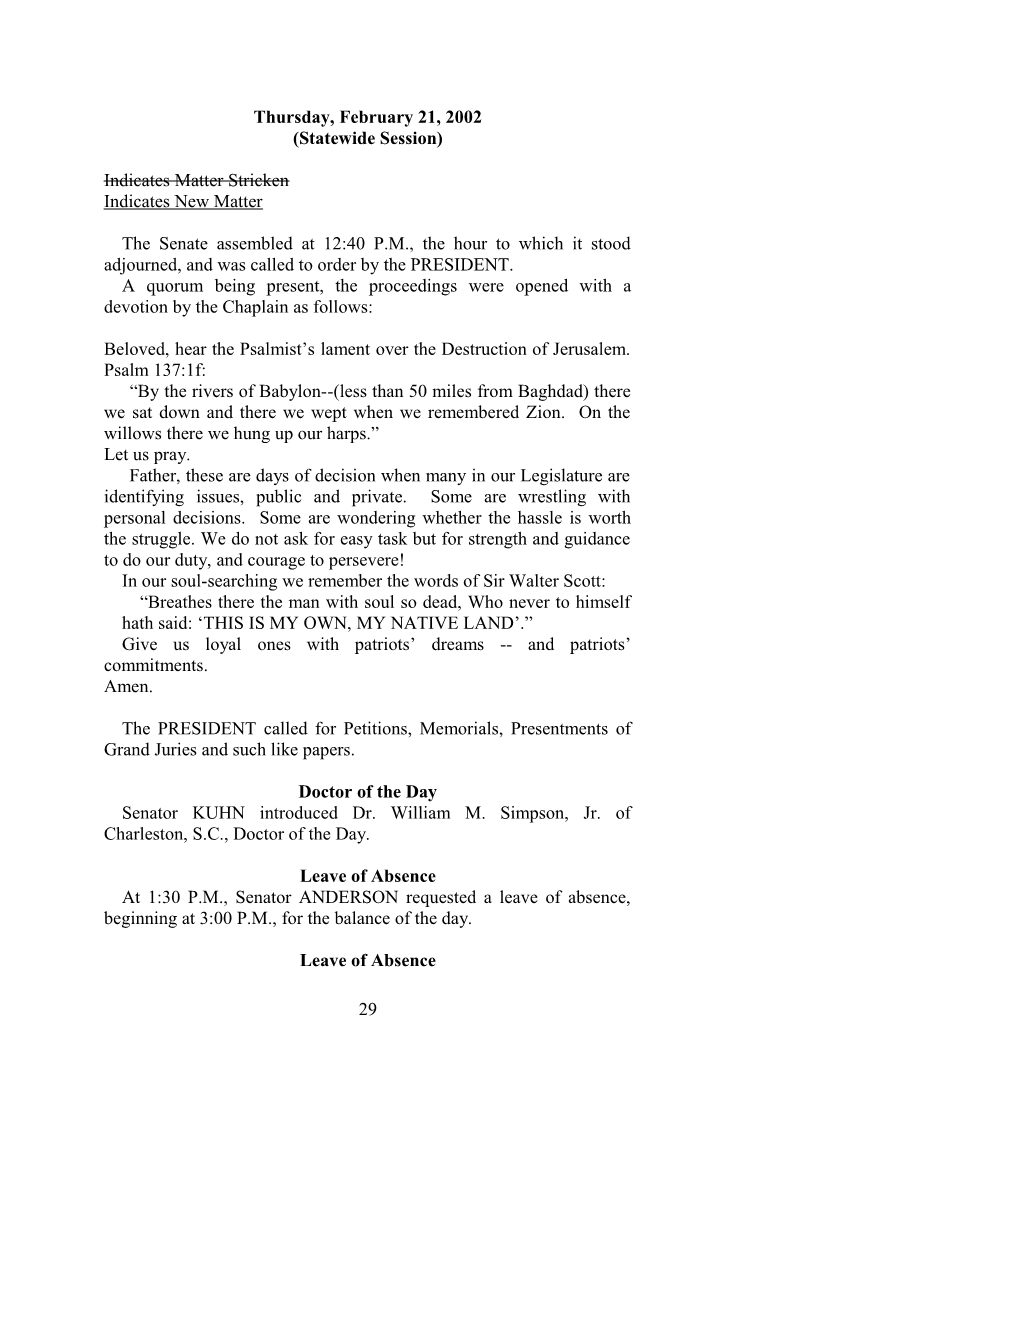 Senate Journal for Feb. 21, 2002 - South Carolina Legislature Online